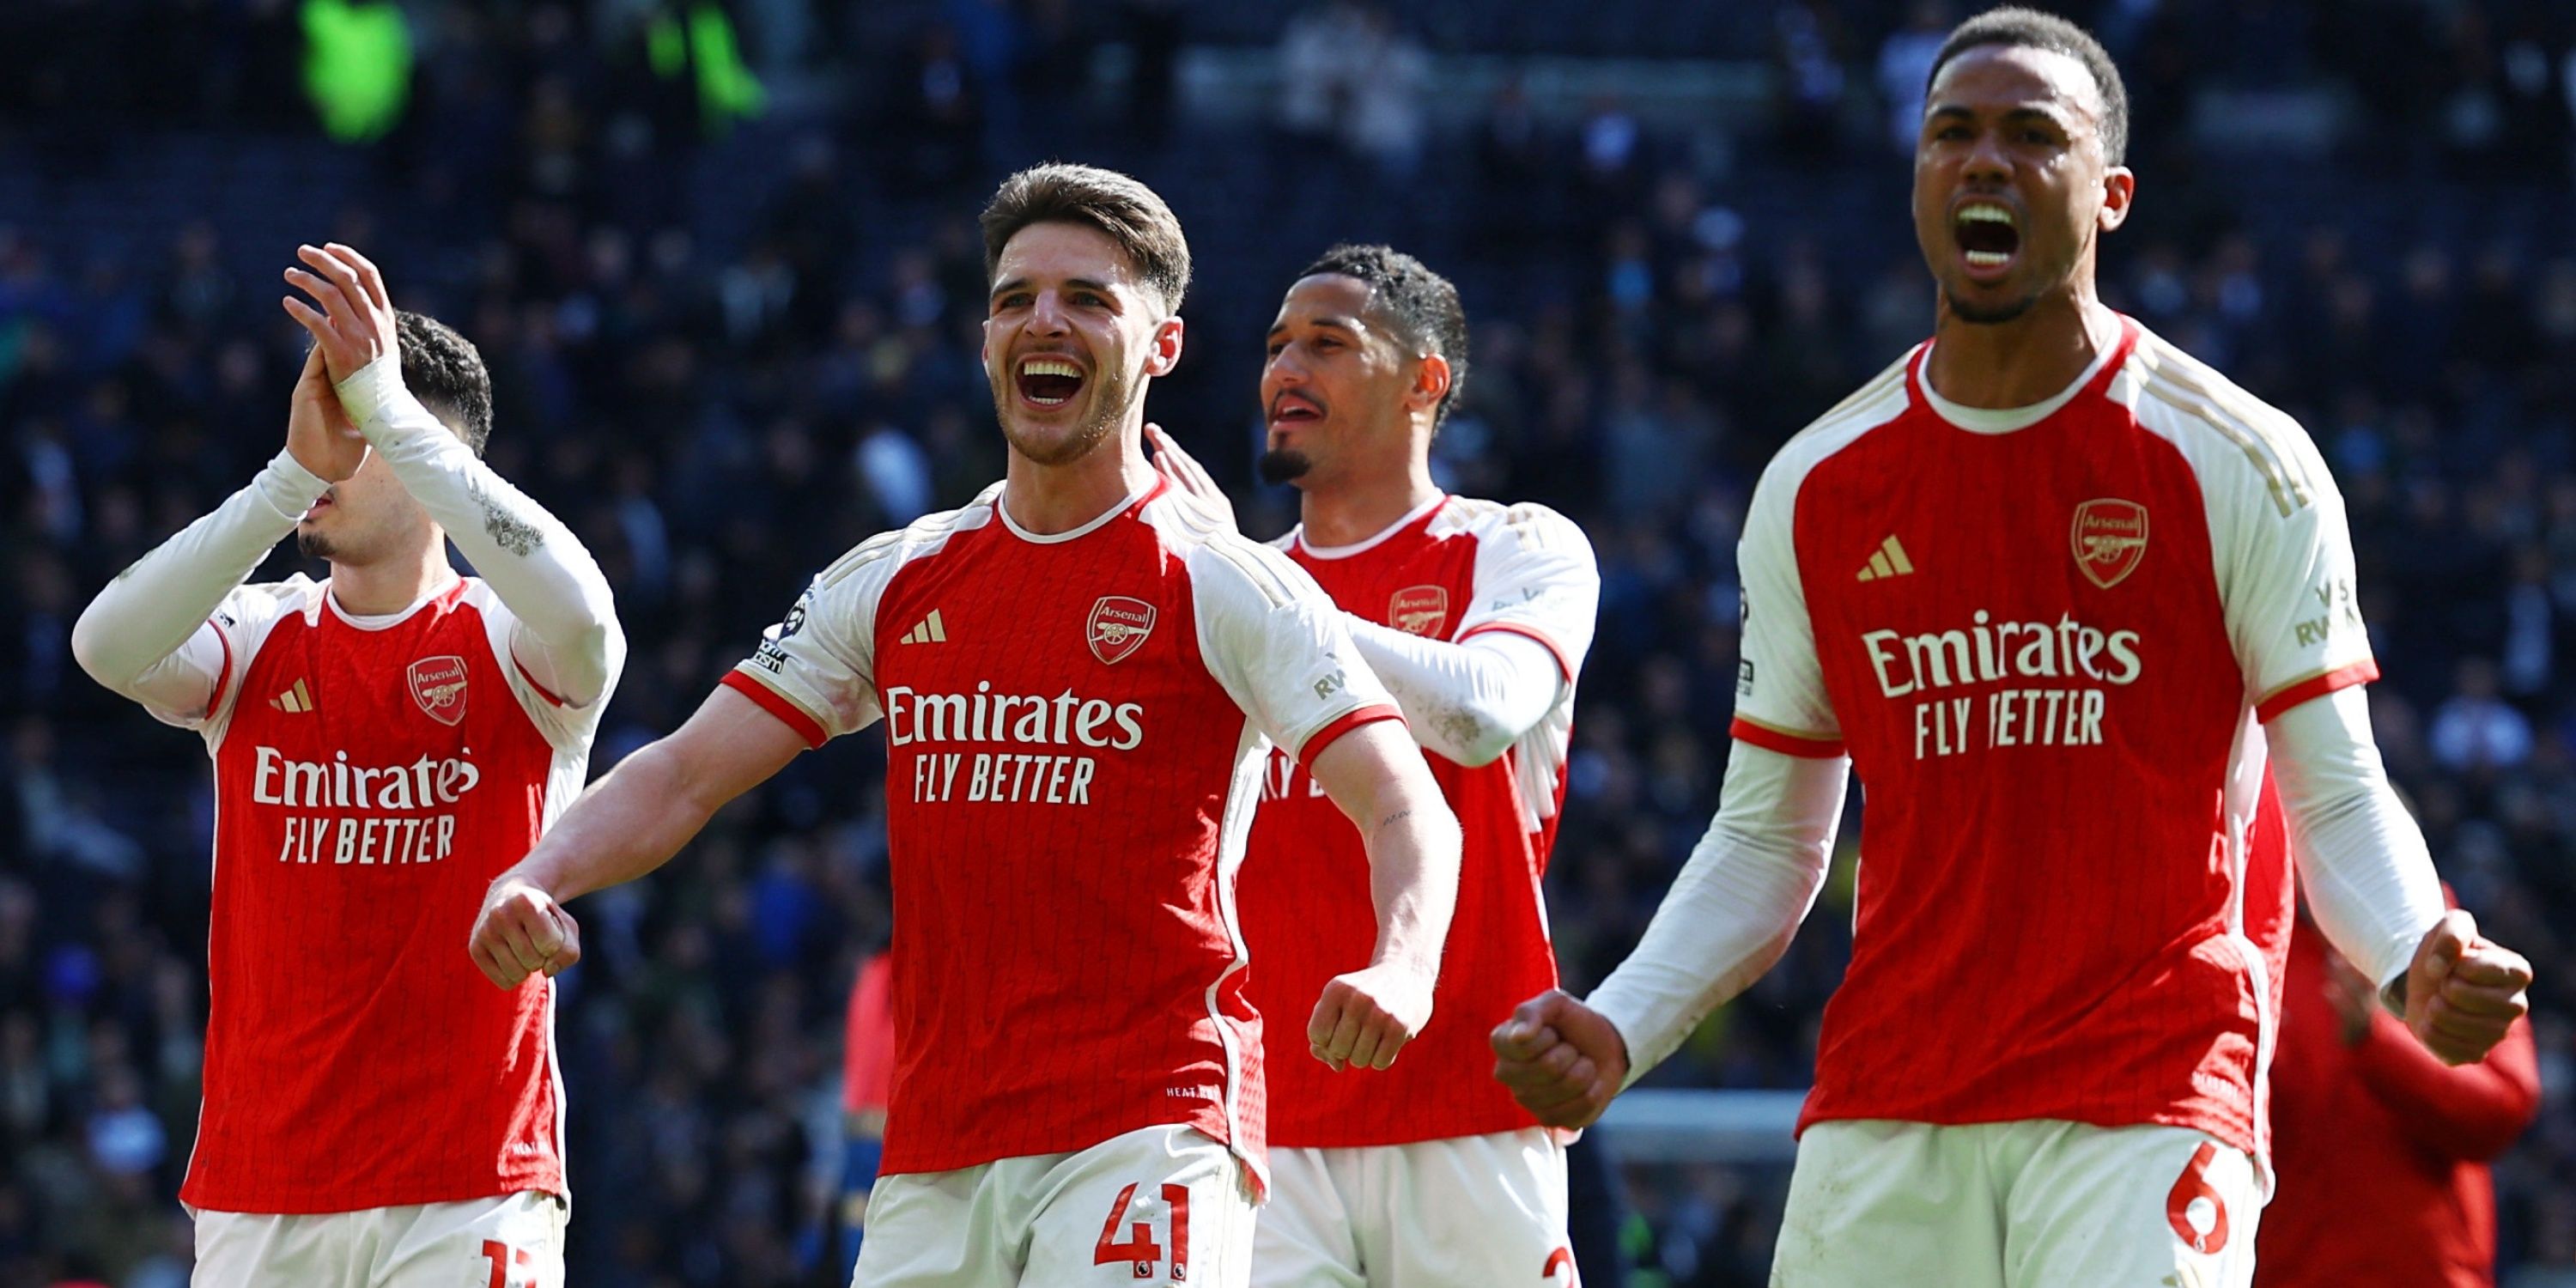 Arsenal players celebrating